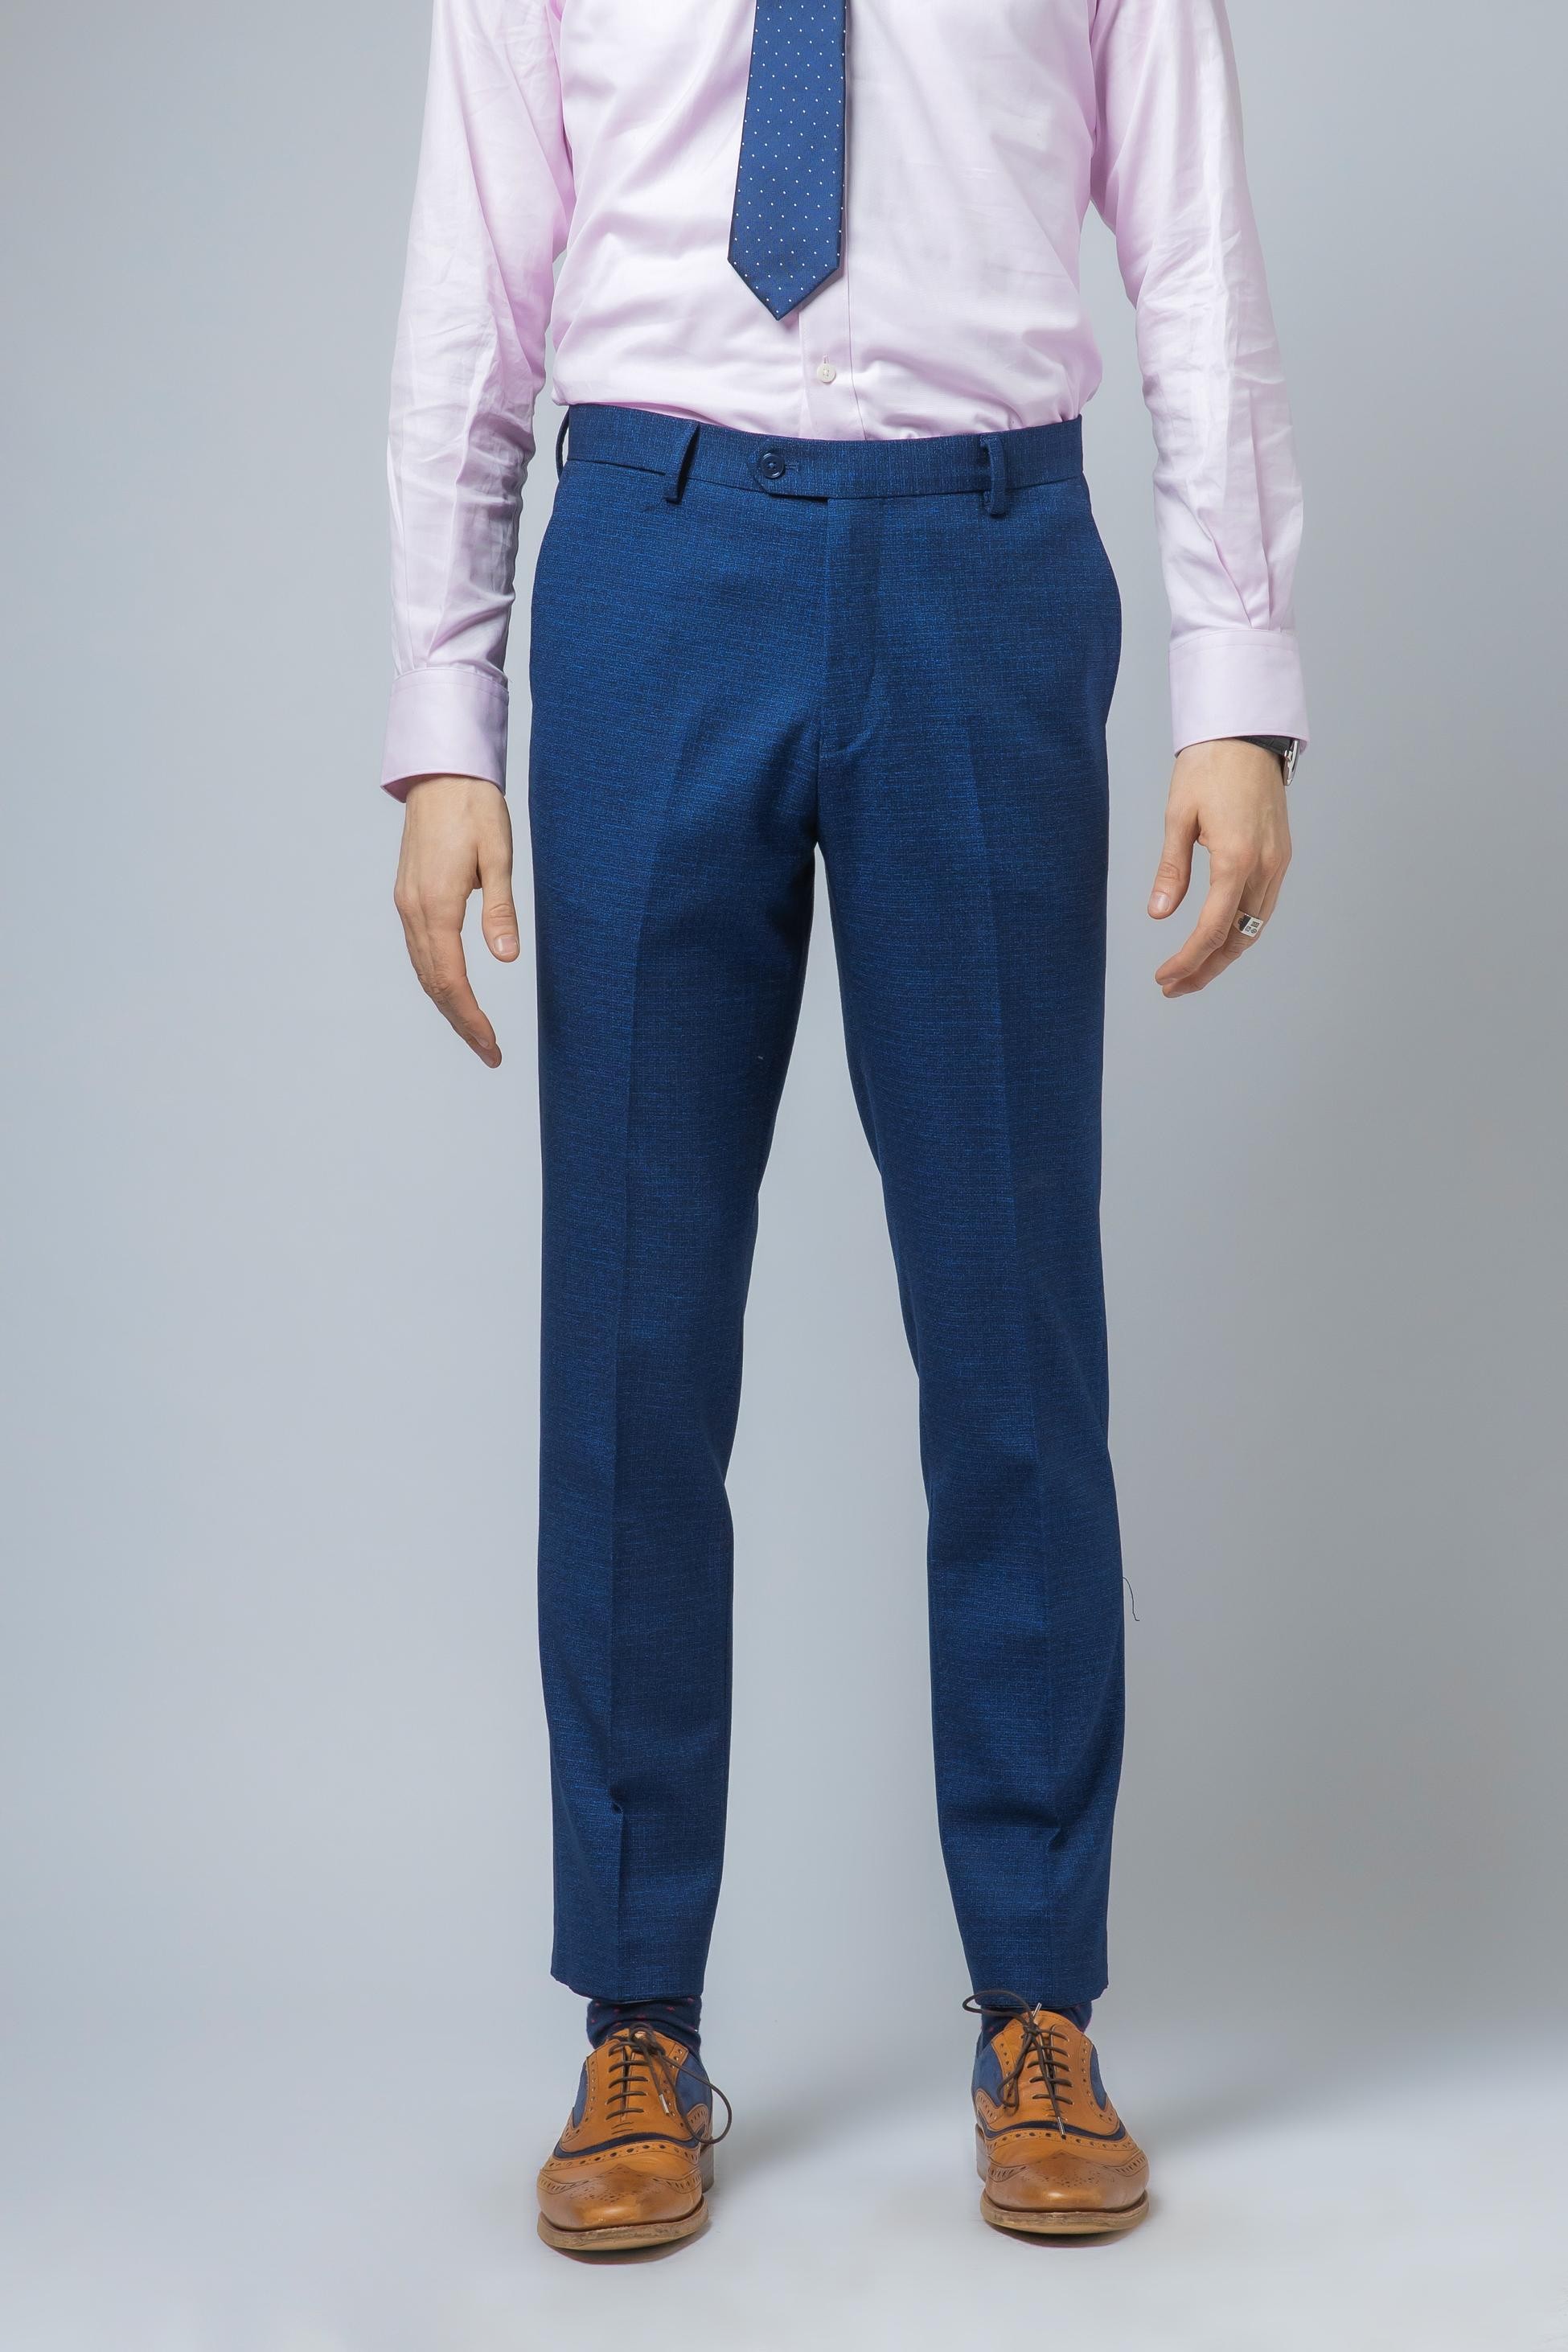 Pantalon slim bleu pour hommes - MATEO